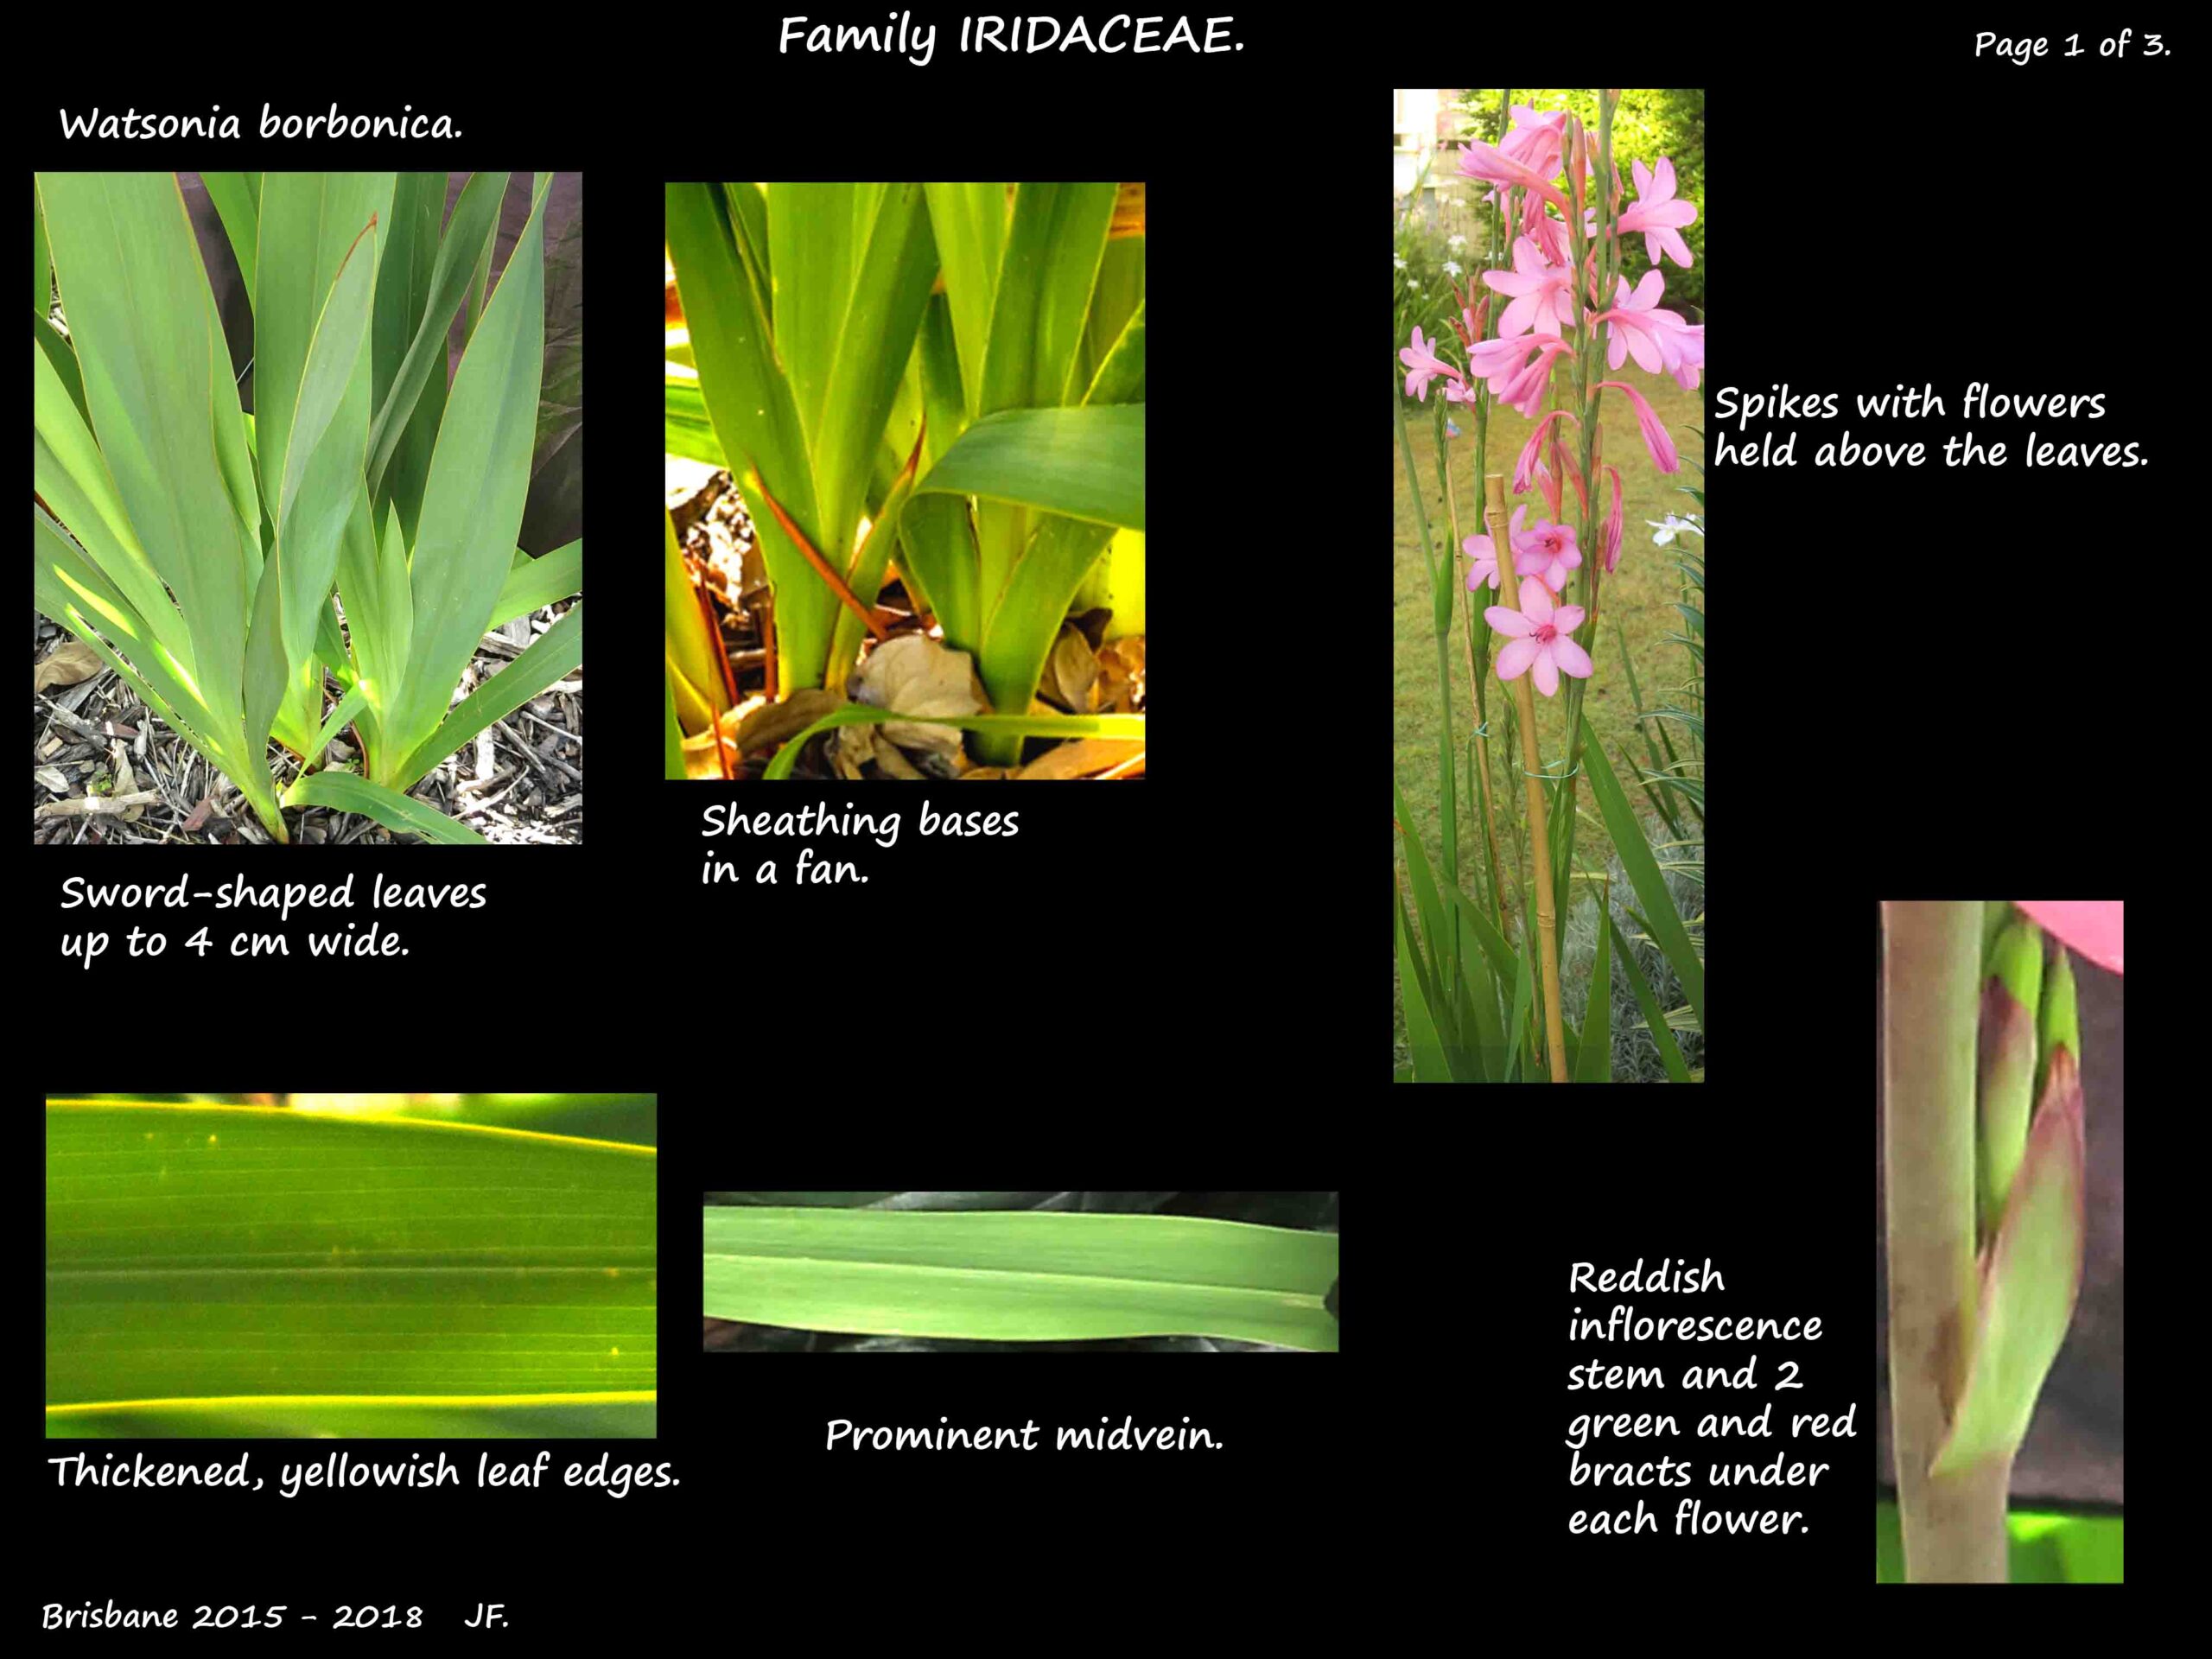 1 Watsonia borbonica leaves & inflorescences